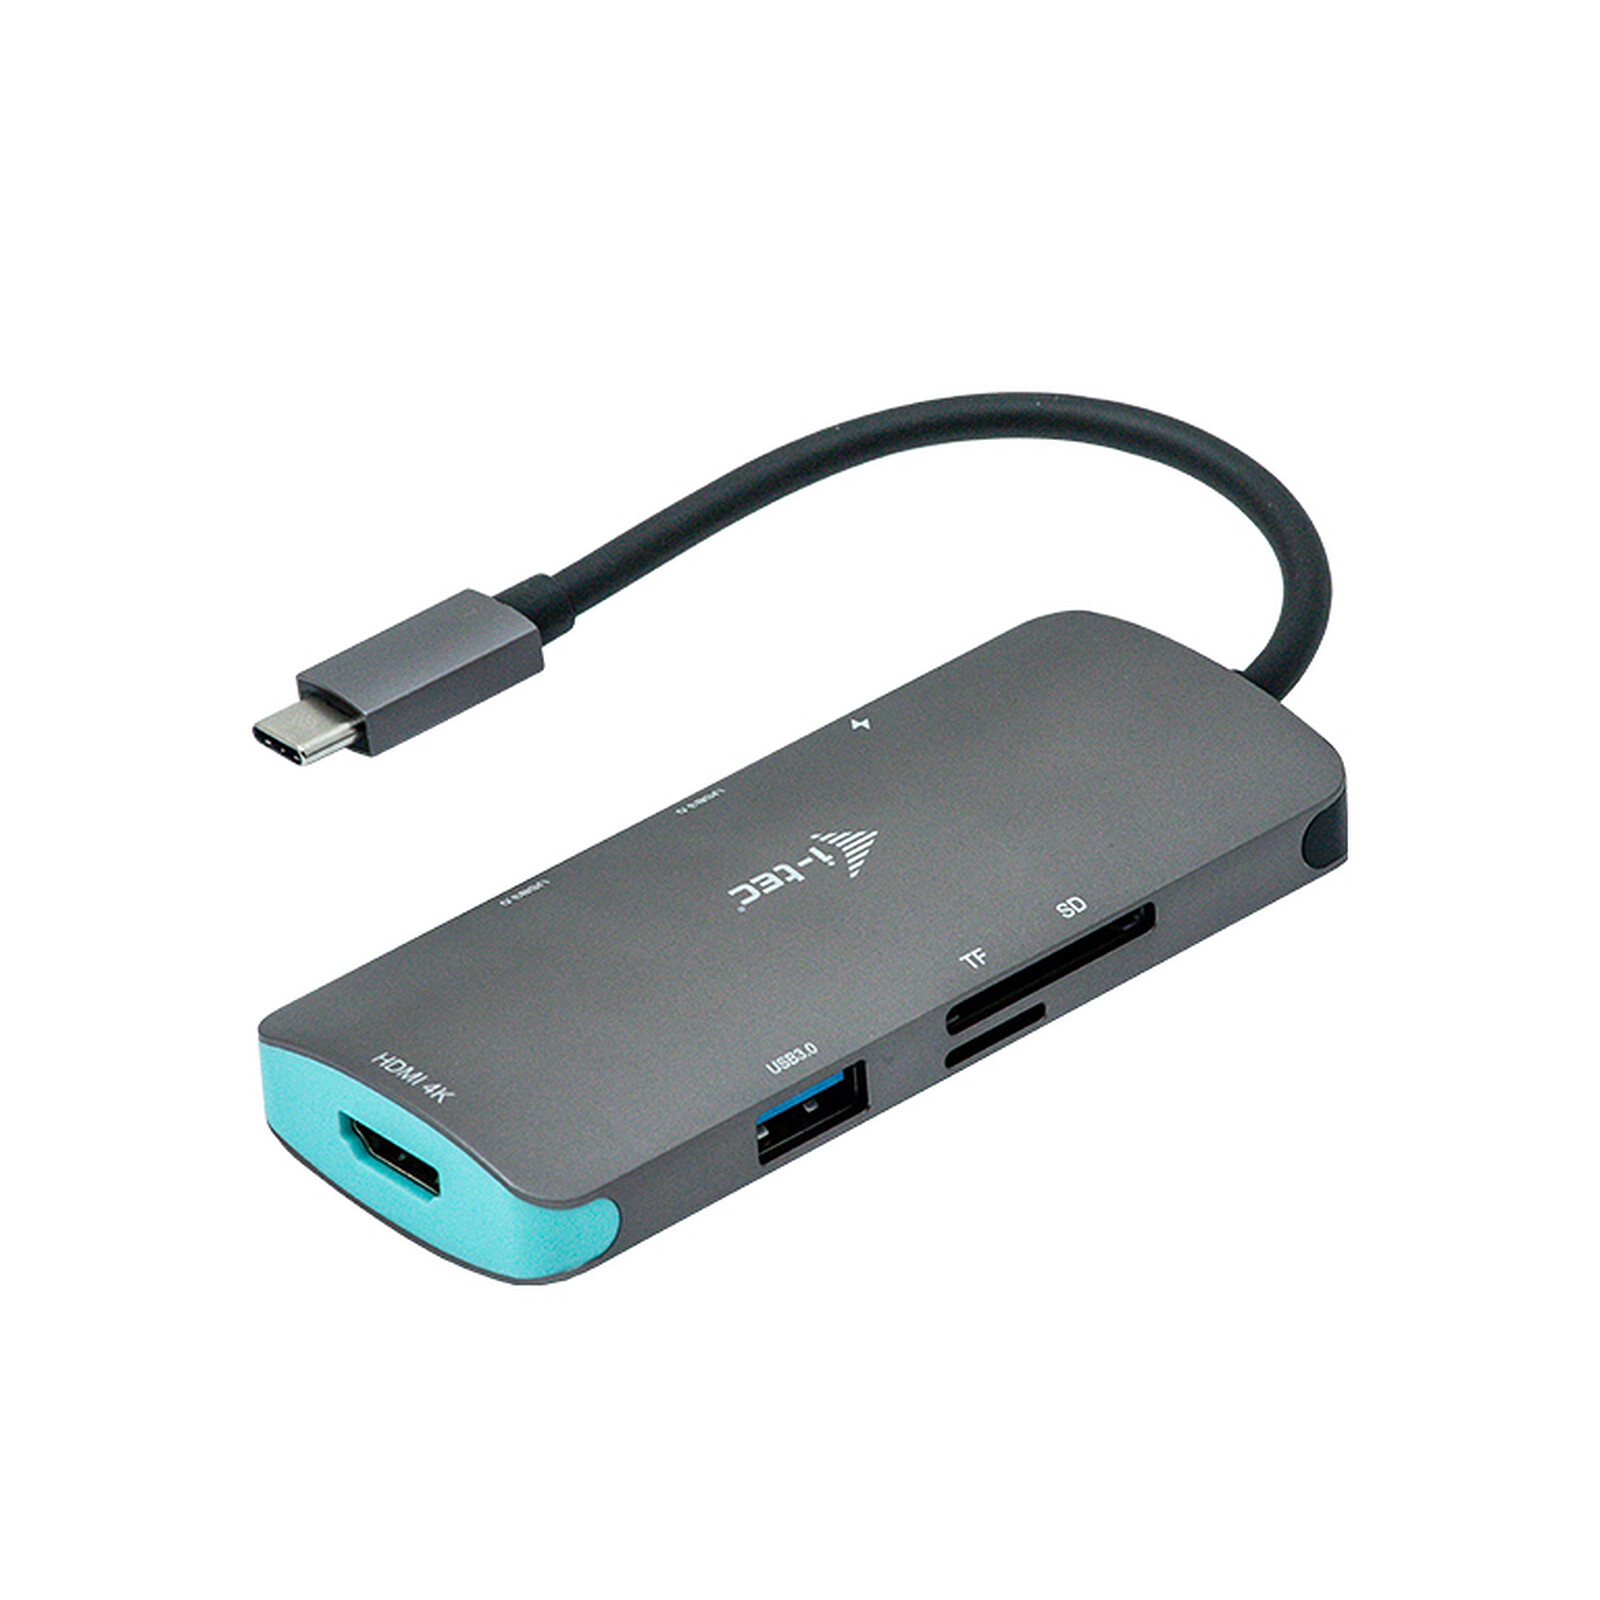 C31NANODOCKVGAPD  i-tec USB-C Travel Nano Dock HDMI/VGA with LAN